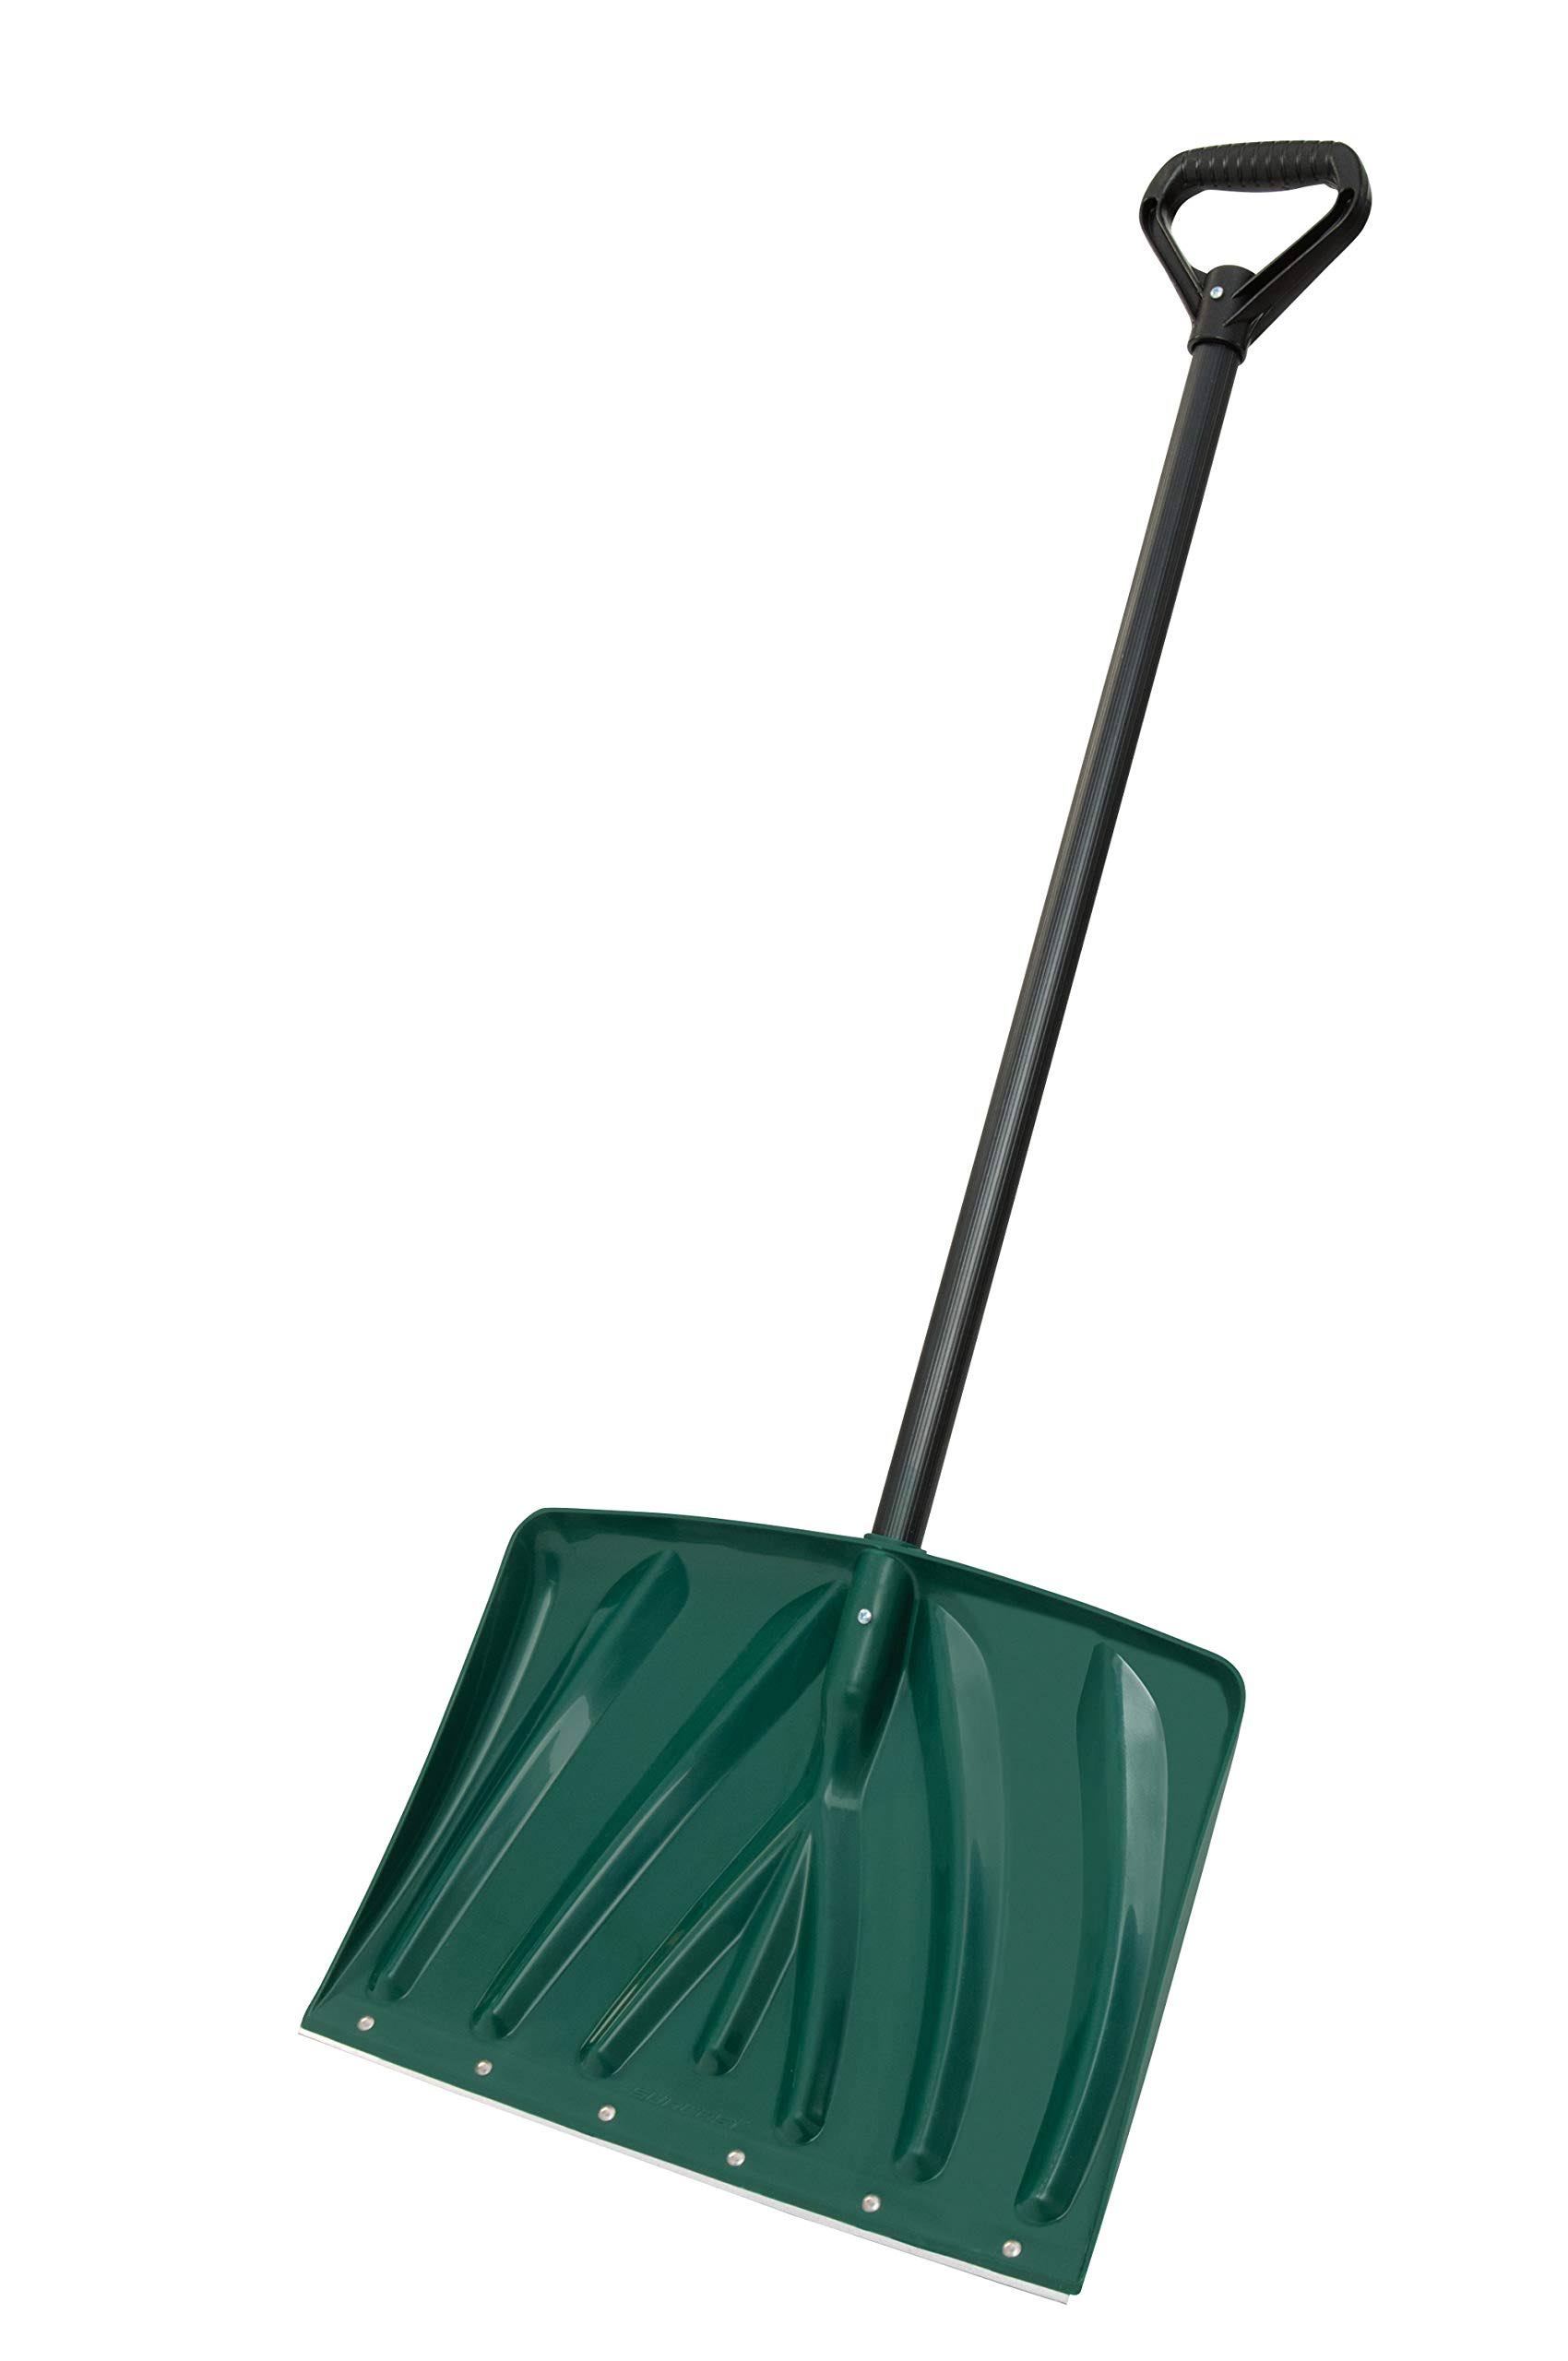 Suncast SN1250 Snow Shovel - With Wear Strip, Green, 18"